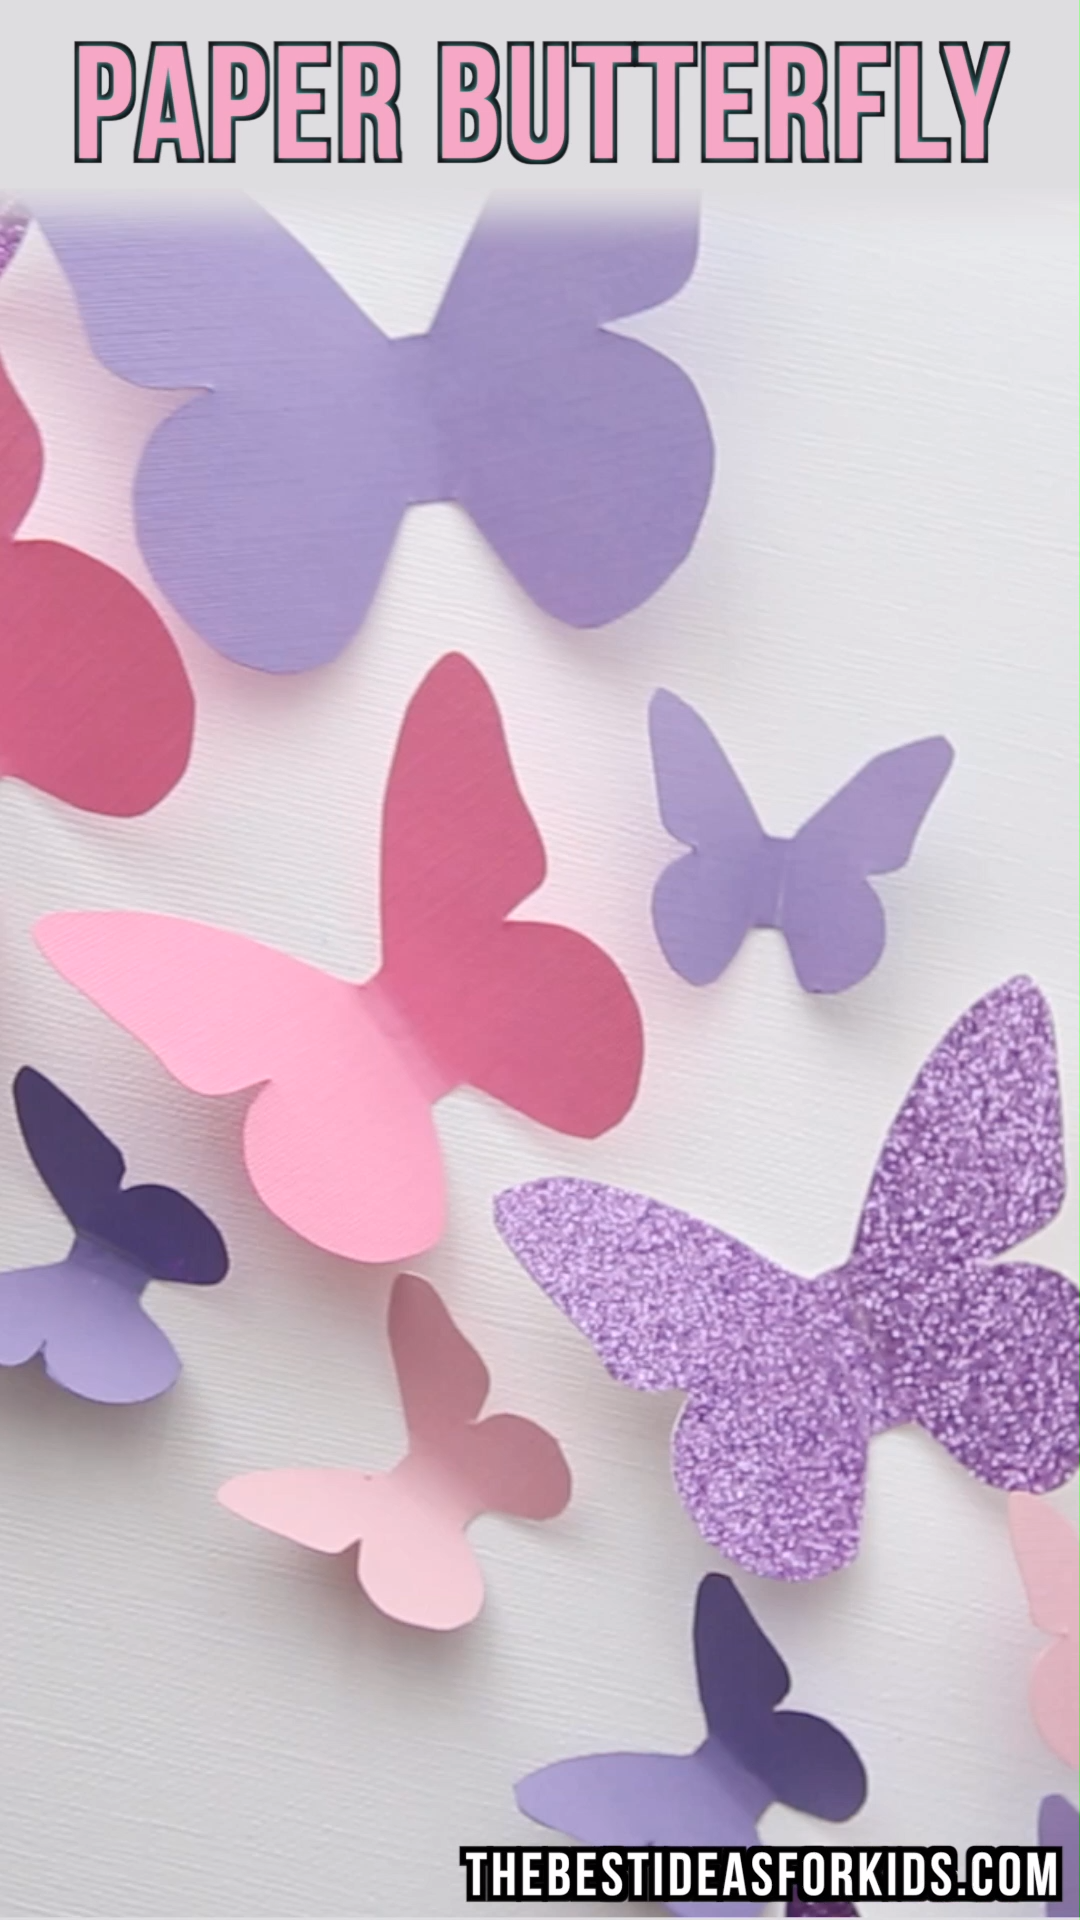 Paper Butterfly Butterfly Paper Sommerdekobasteln Diy Papierblumen Papierschmetterlinge Papierblumenhandwerk